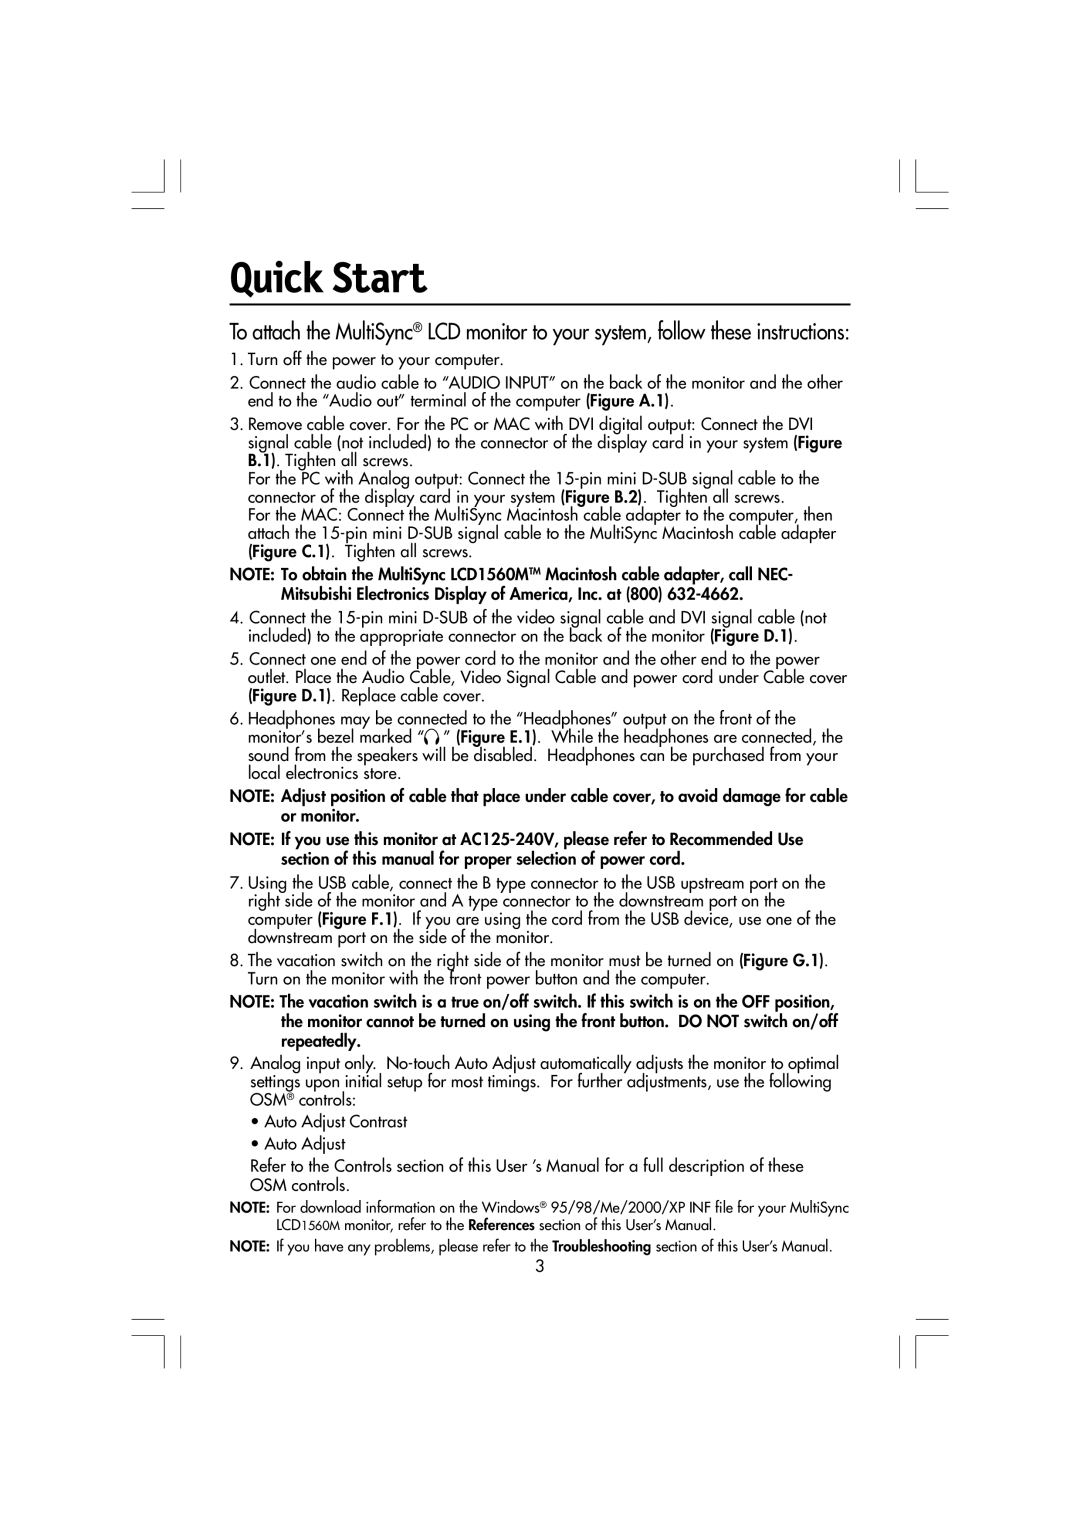 Mitsubishi Electronics LCD1560M manual Quick Start 